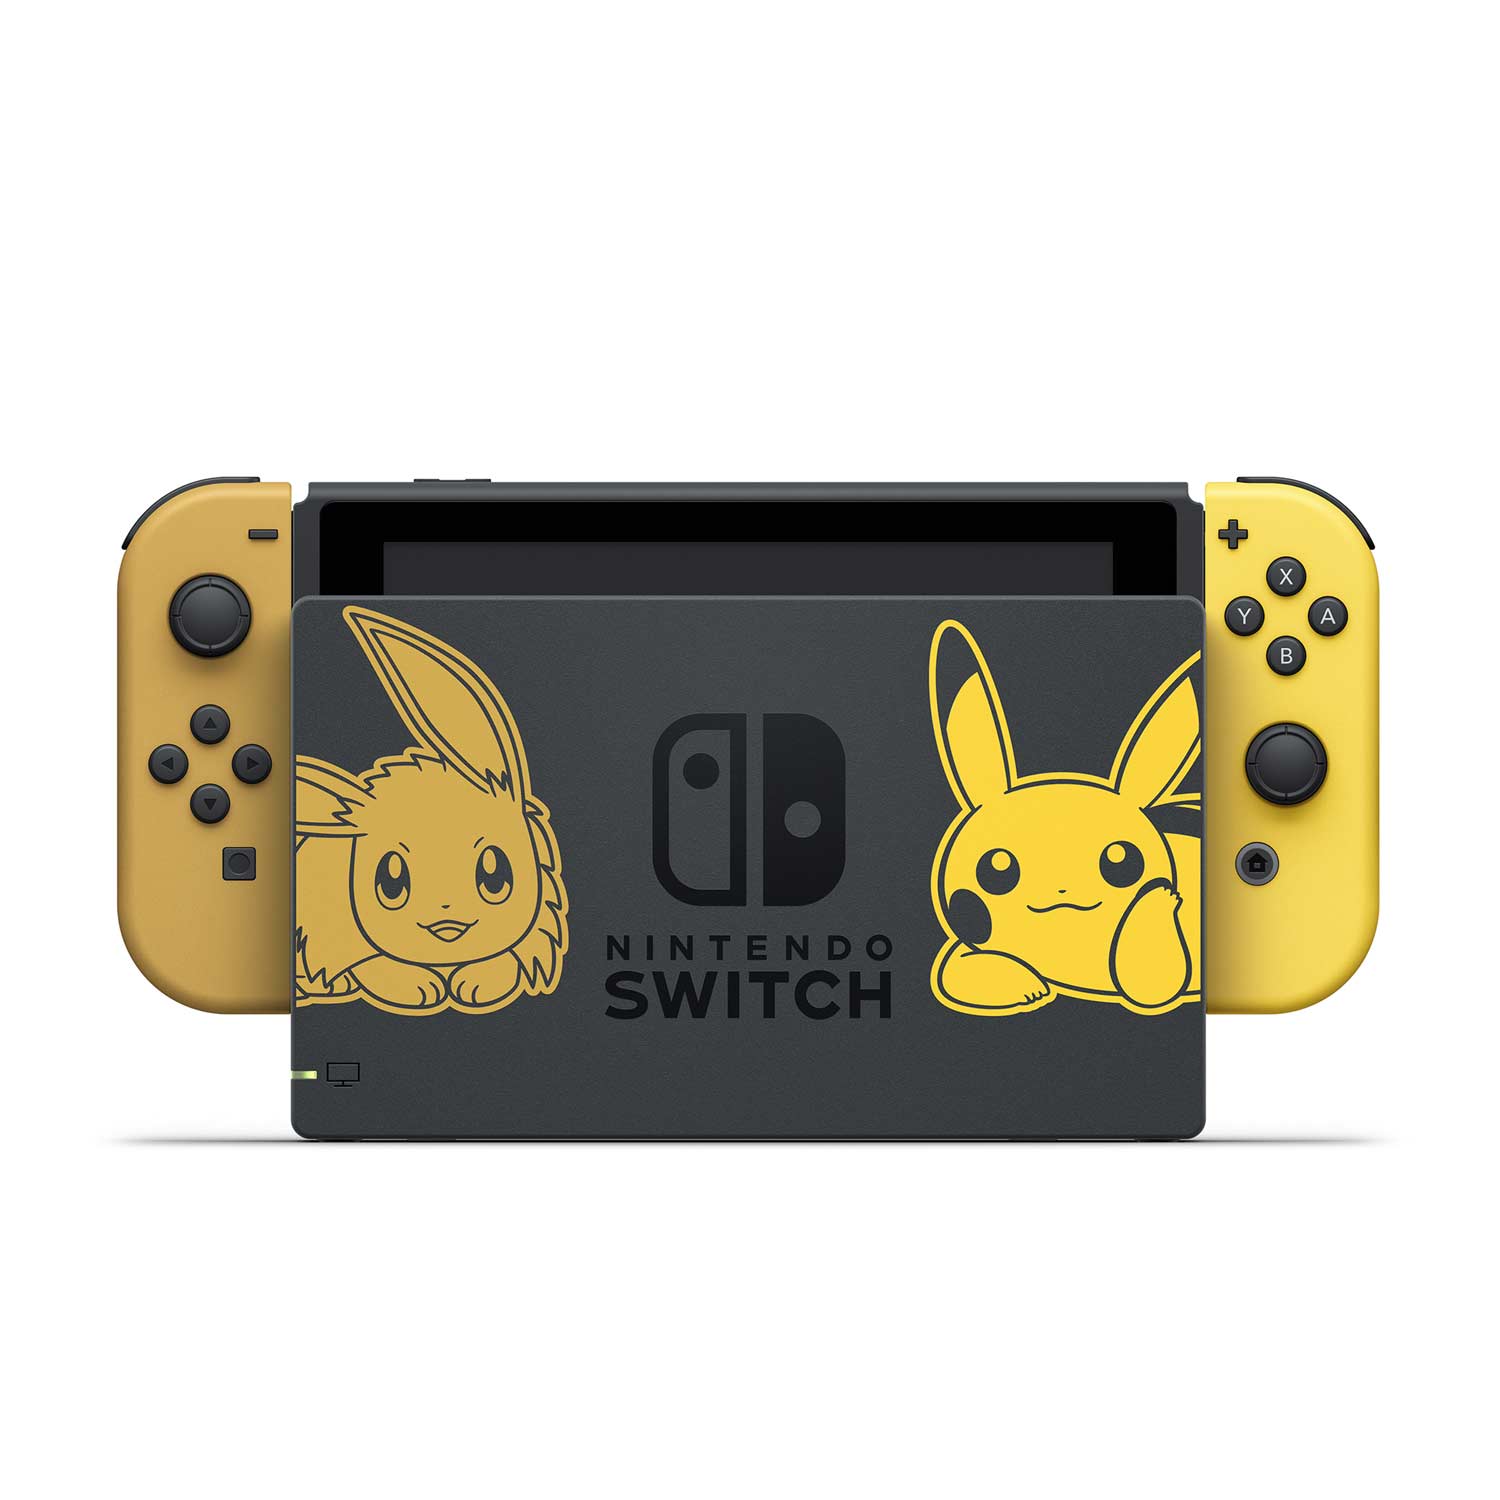 Nintendo Switch Pikachu Eevee Edition With Pokémon Lets Go Pikachu